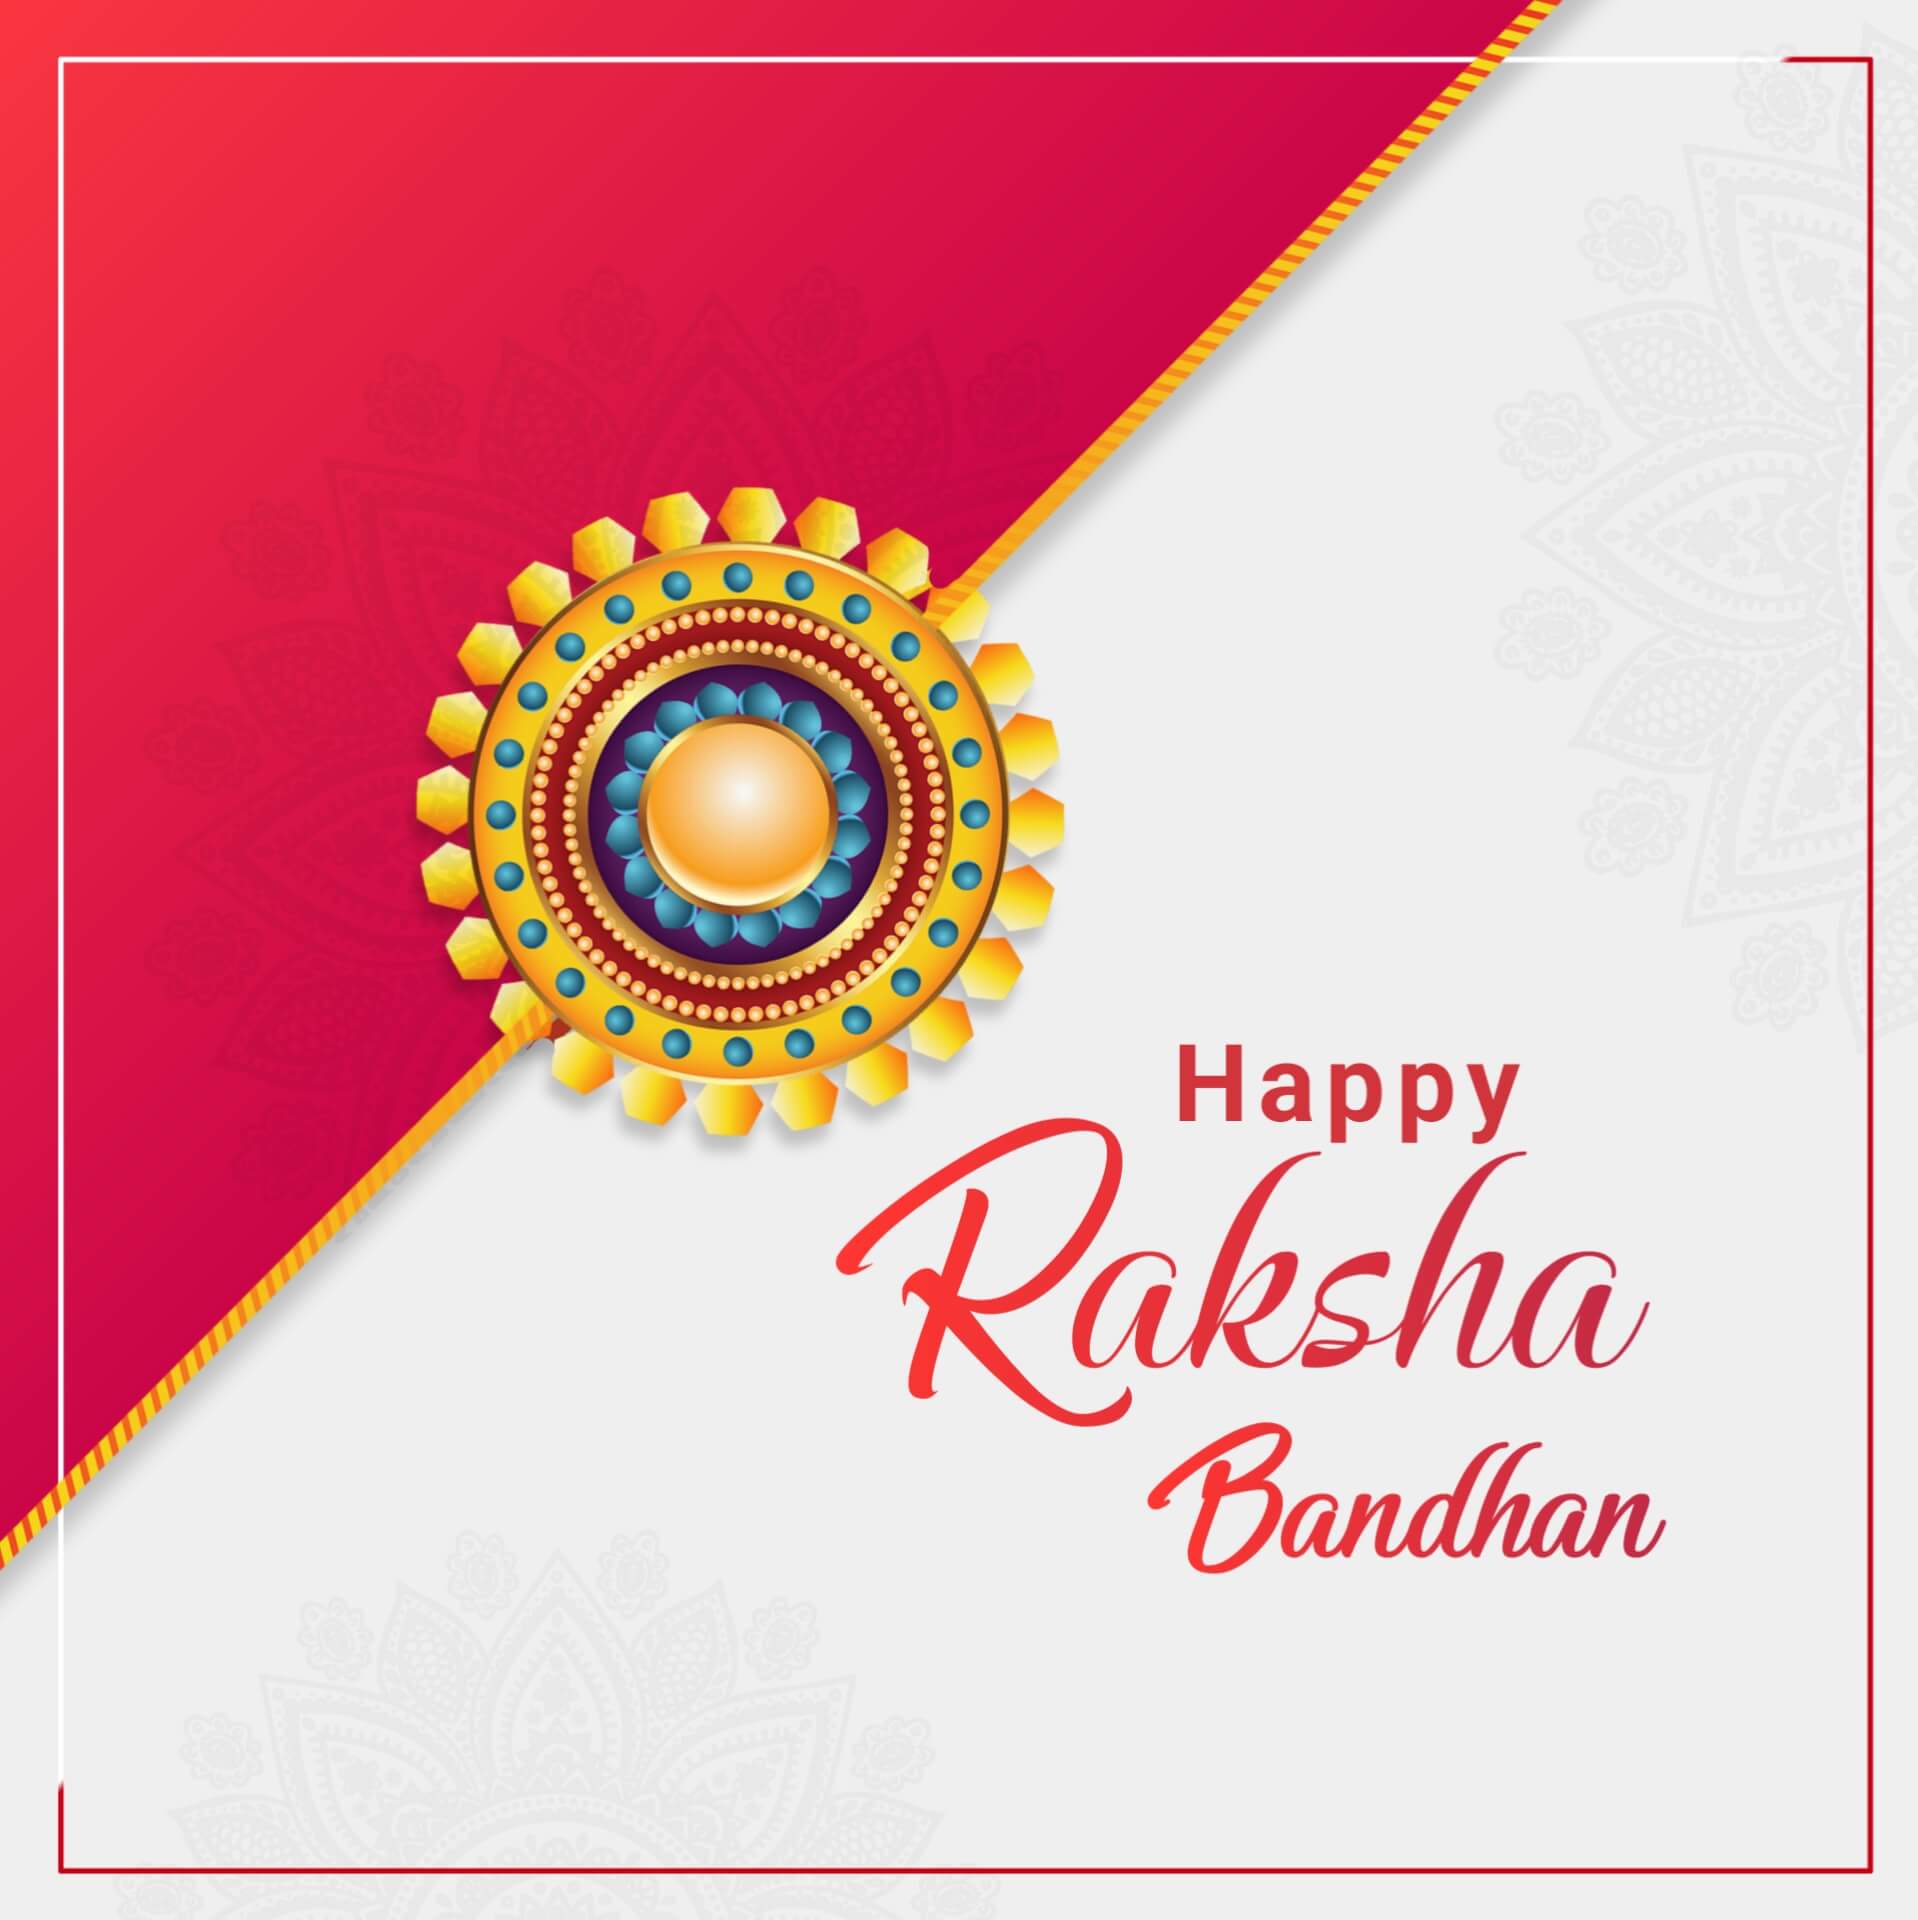 1084+ Best Happy Raksha Bandhan Images, Photos & Pictures